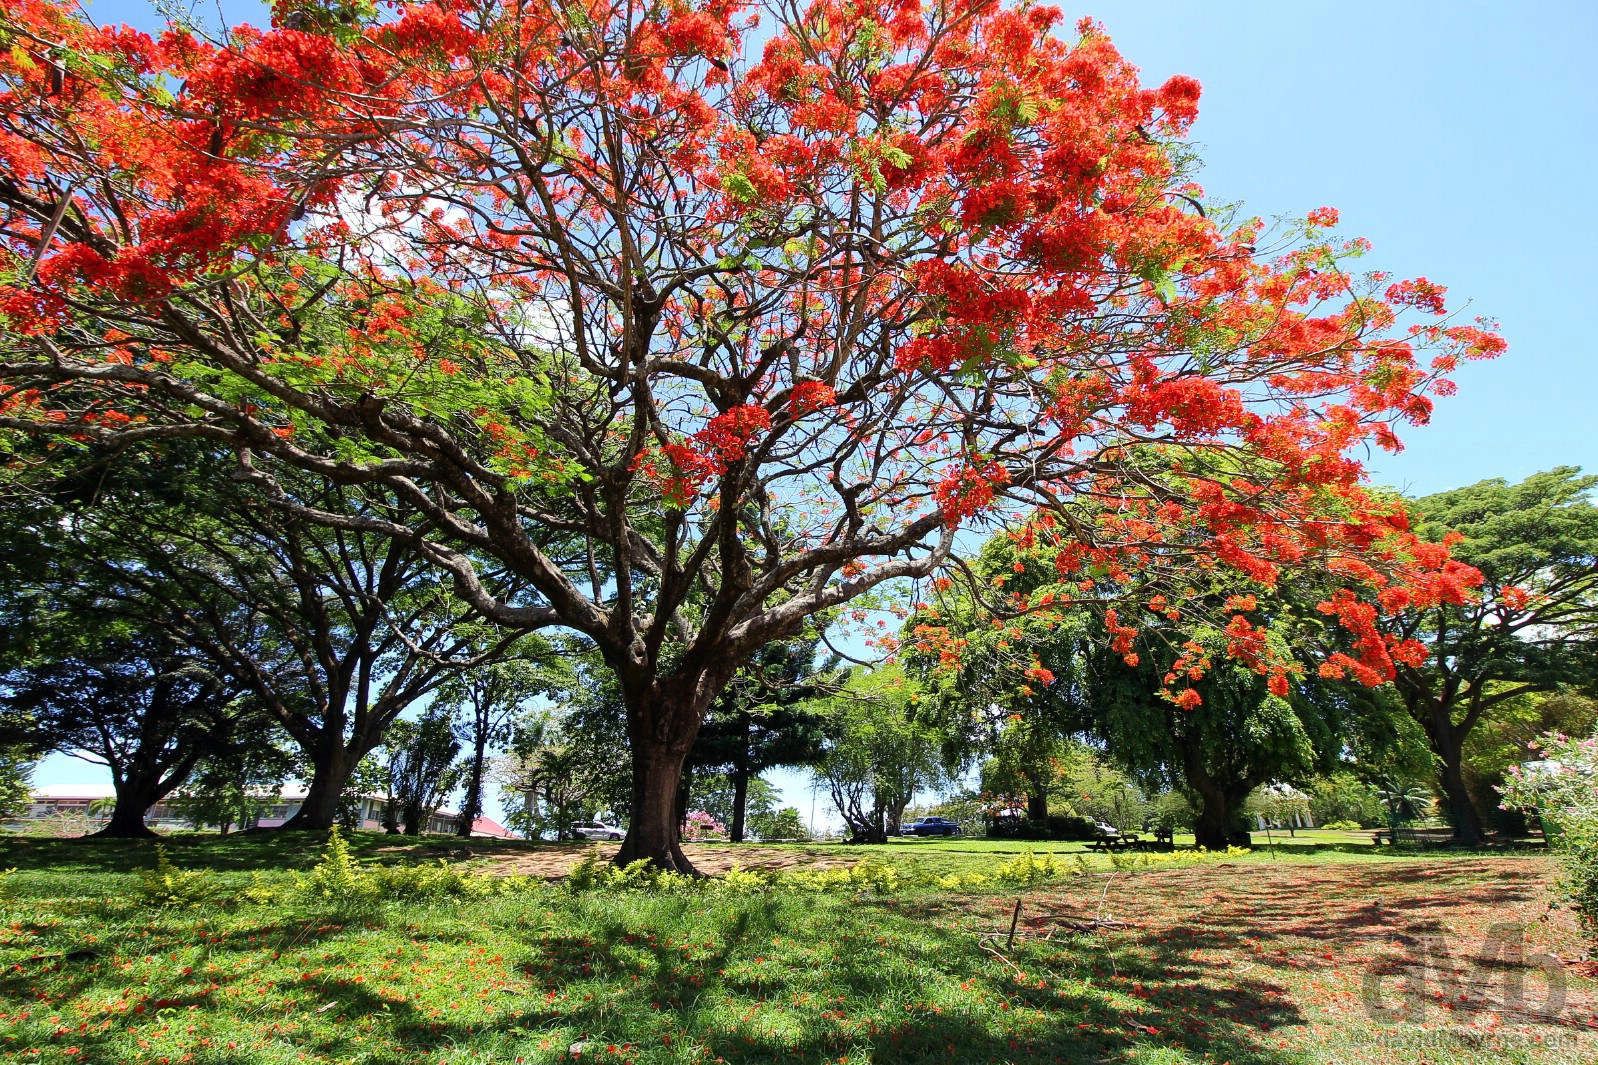 Dominica Botanical Gardens, Roseau, Dominica, Lesser Antilles. June 10, 2015.